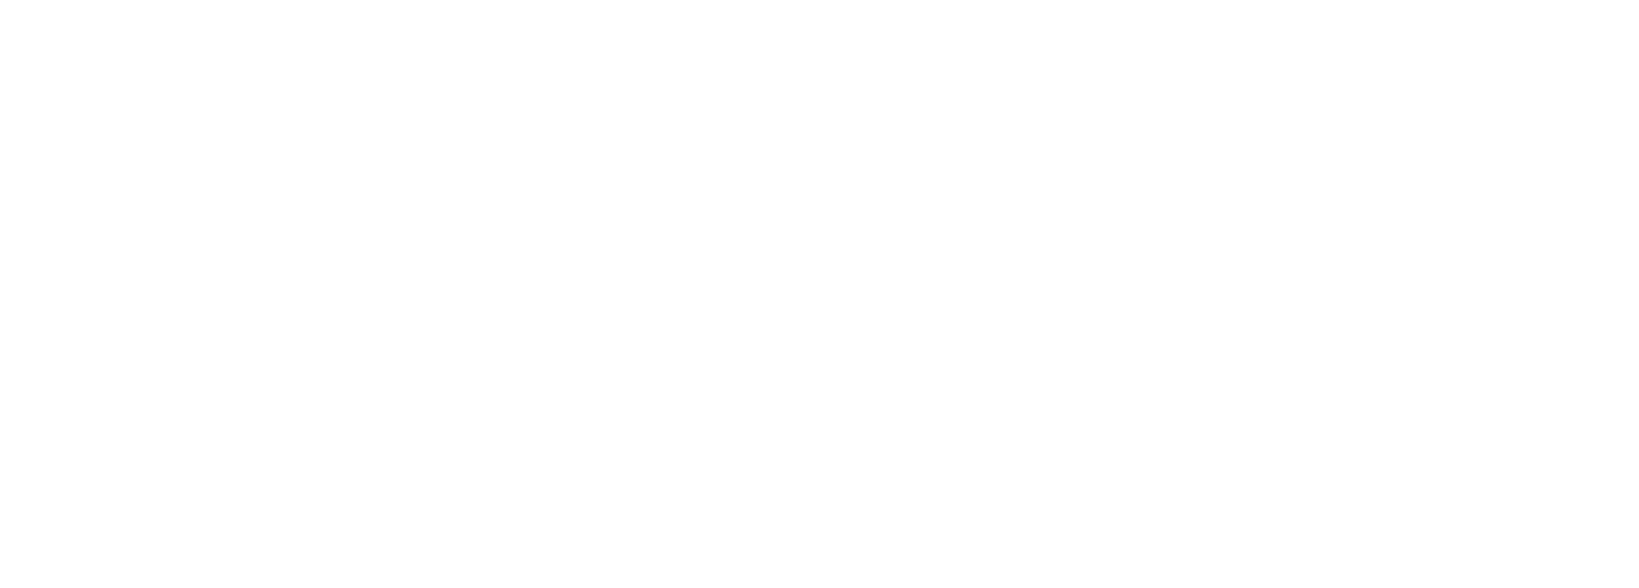 Logo evoc weiss